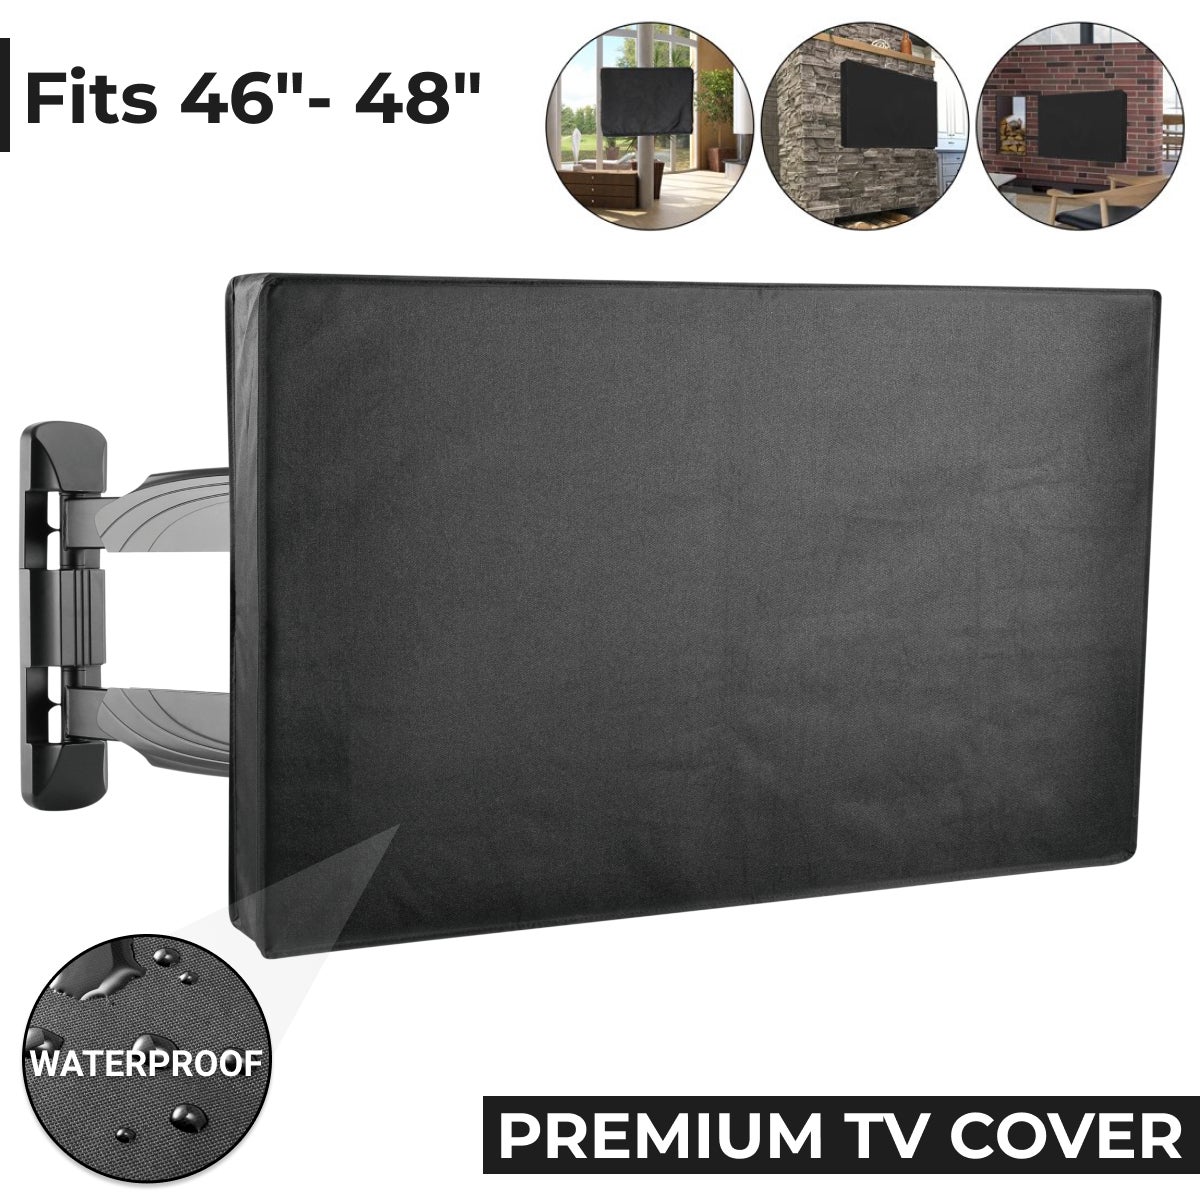 46" - 48" inch TV Cover Waterproof Dustproof Outdoor Patio Flat Television Screen Display Protector Outside Weatherproof 46" 47" 48" inch